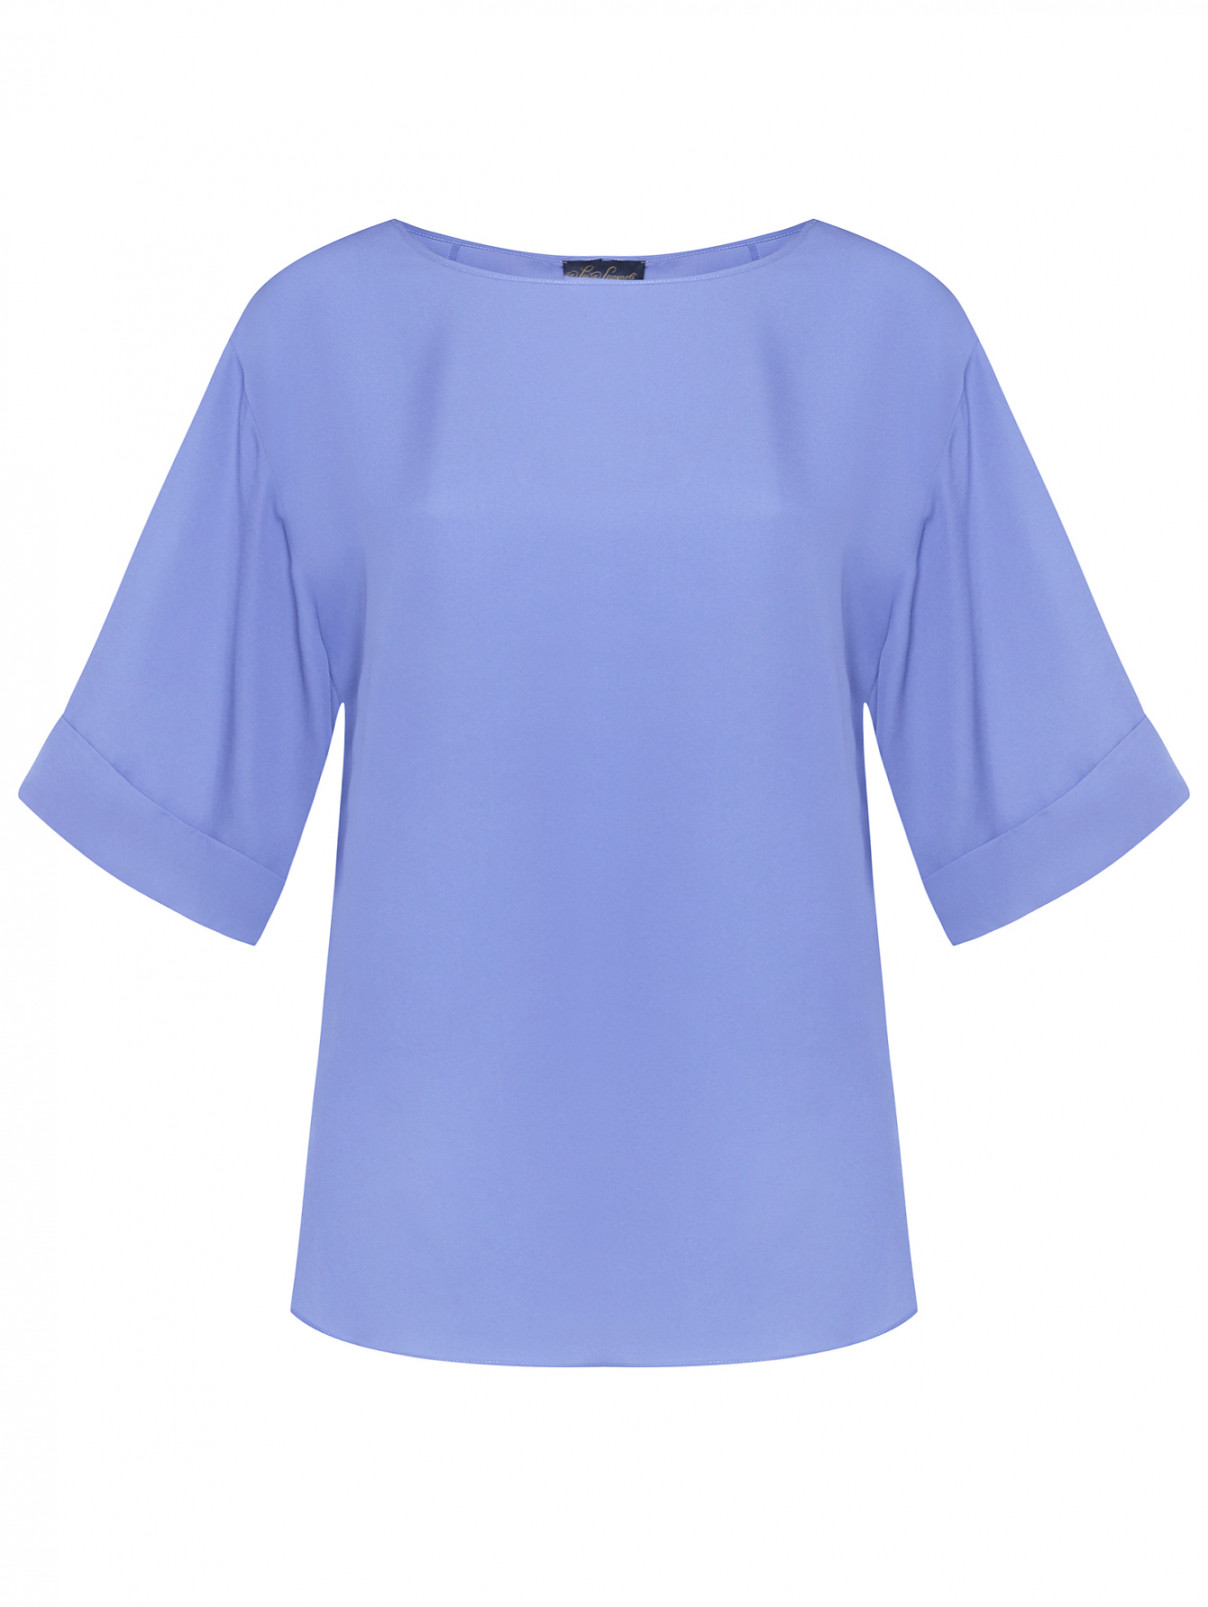 Шелковая блуза с коротким рукавом Luisa Spagnoli  –  Общий вид  – Цвет:  Синий